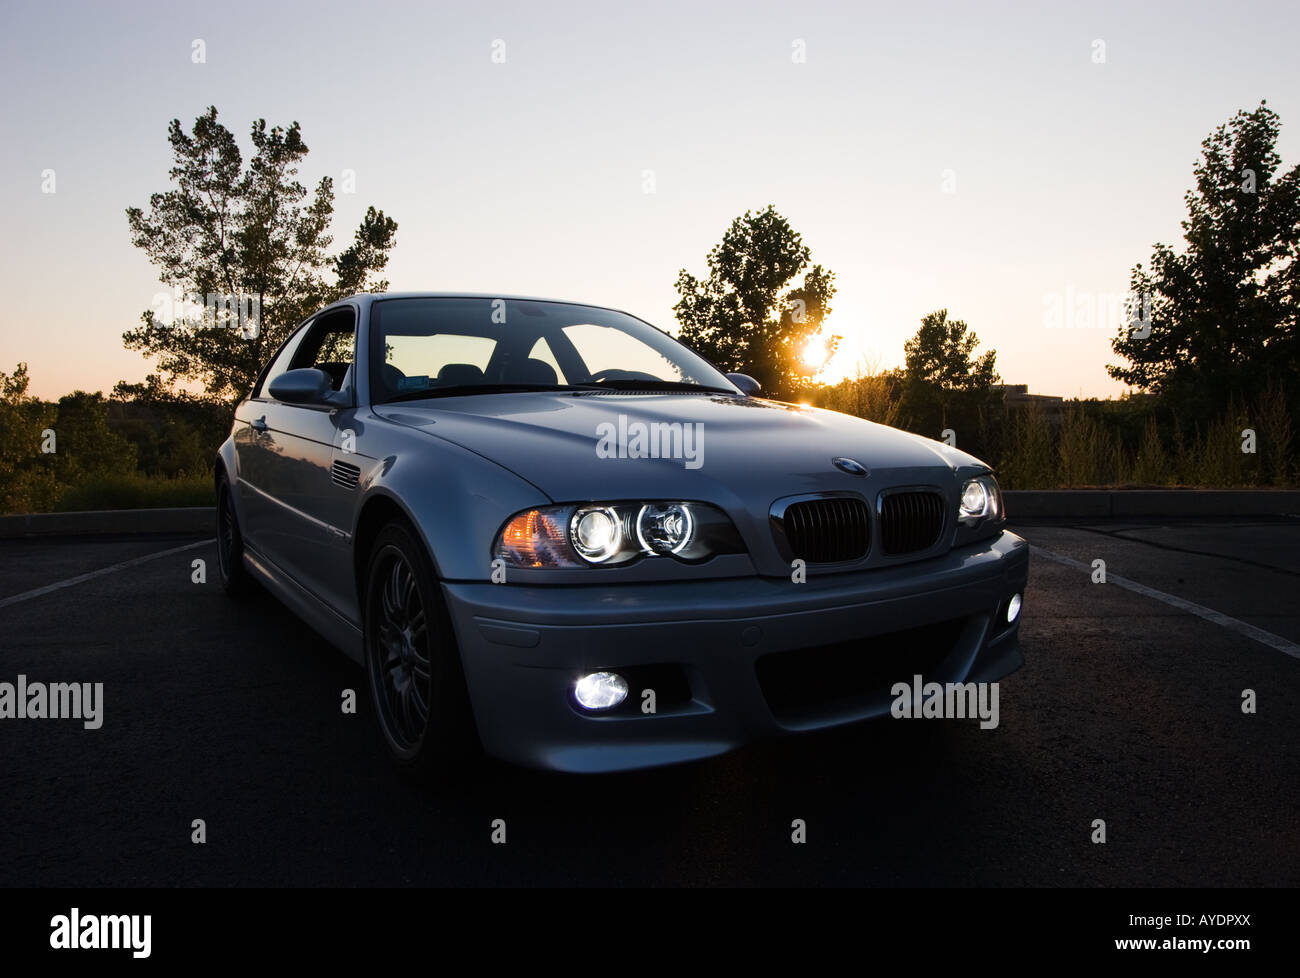 BMW E46 M3 Photo Gallery